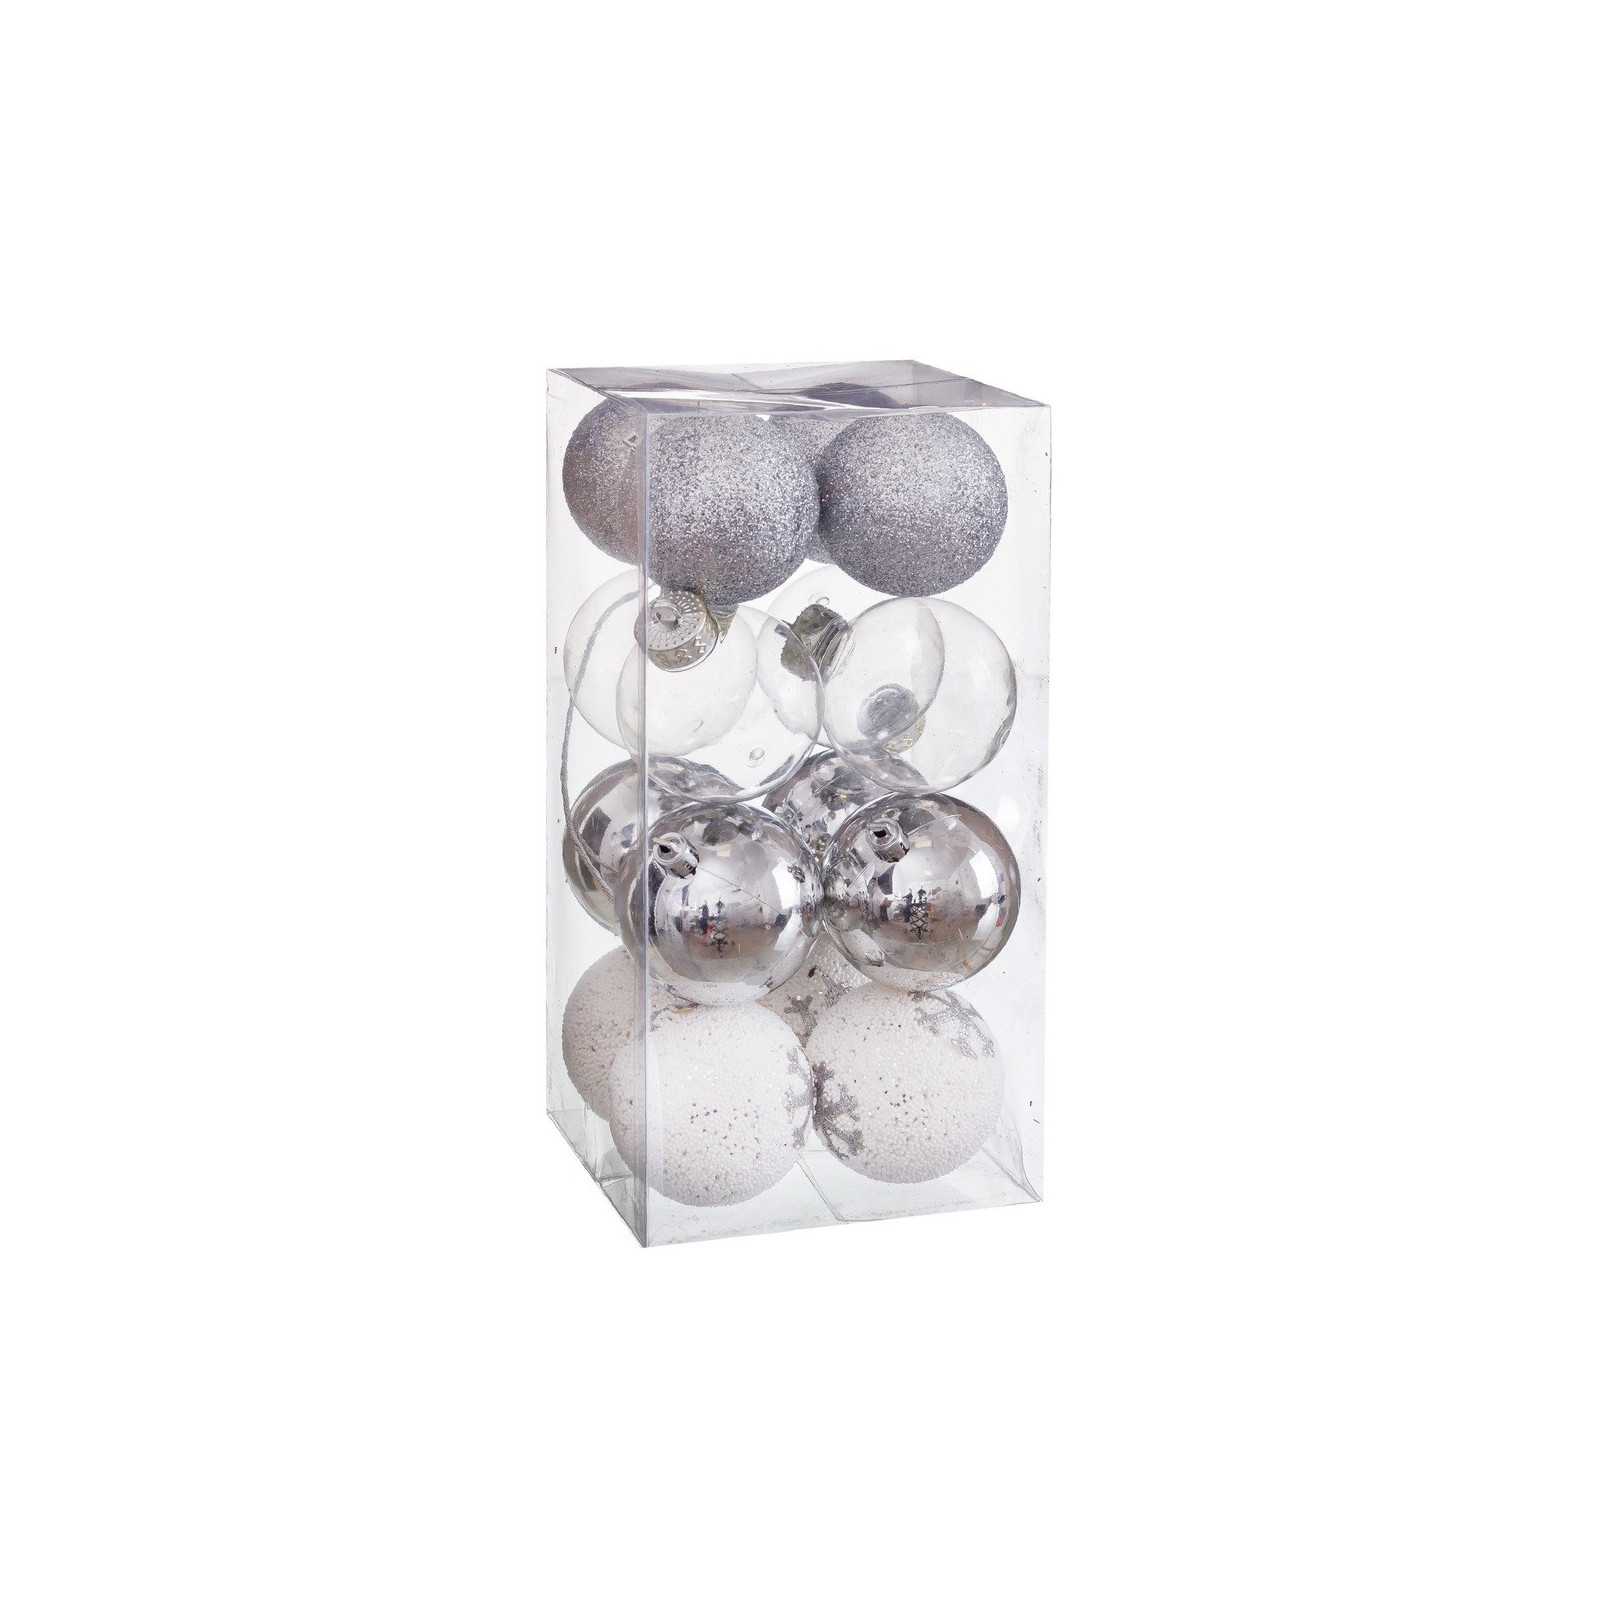 S 16 bolas decorada foam plata 6 x 6 x 6 cm